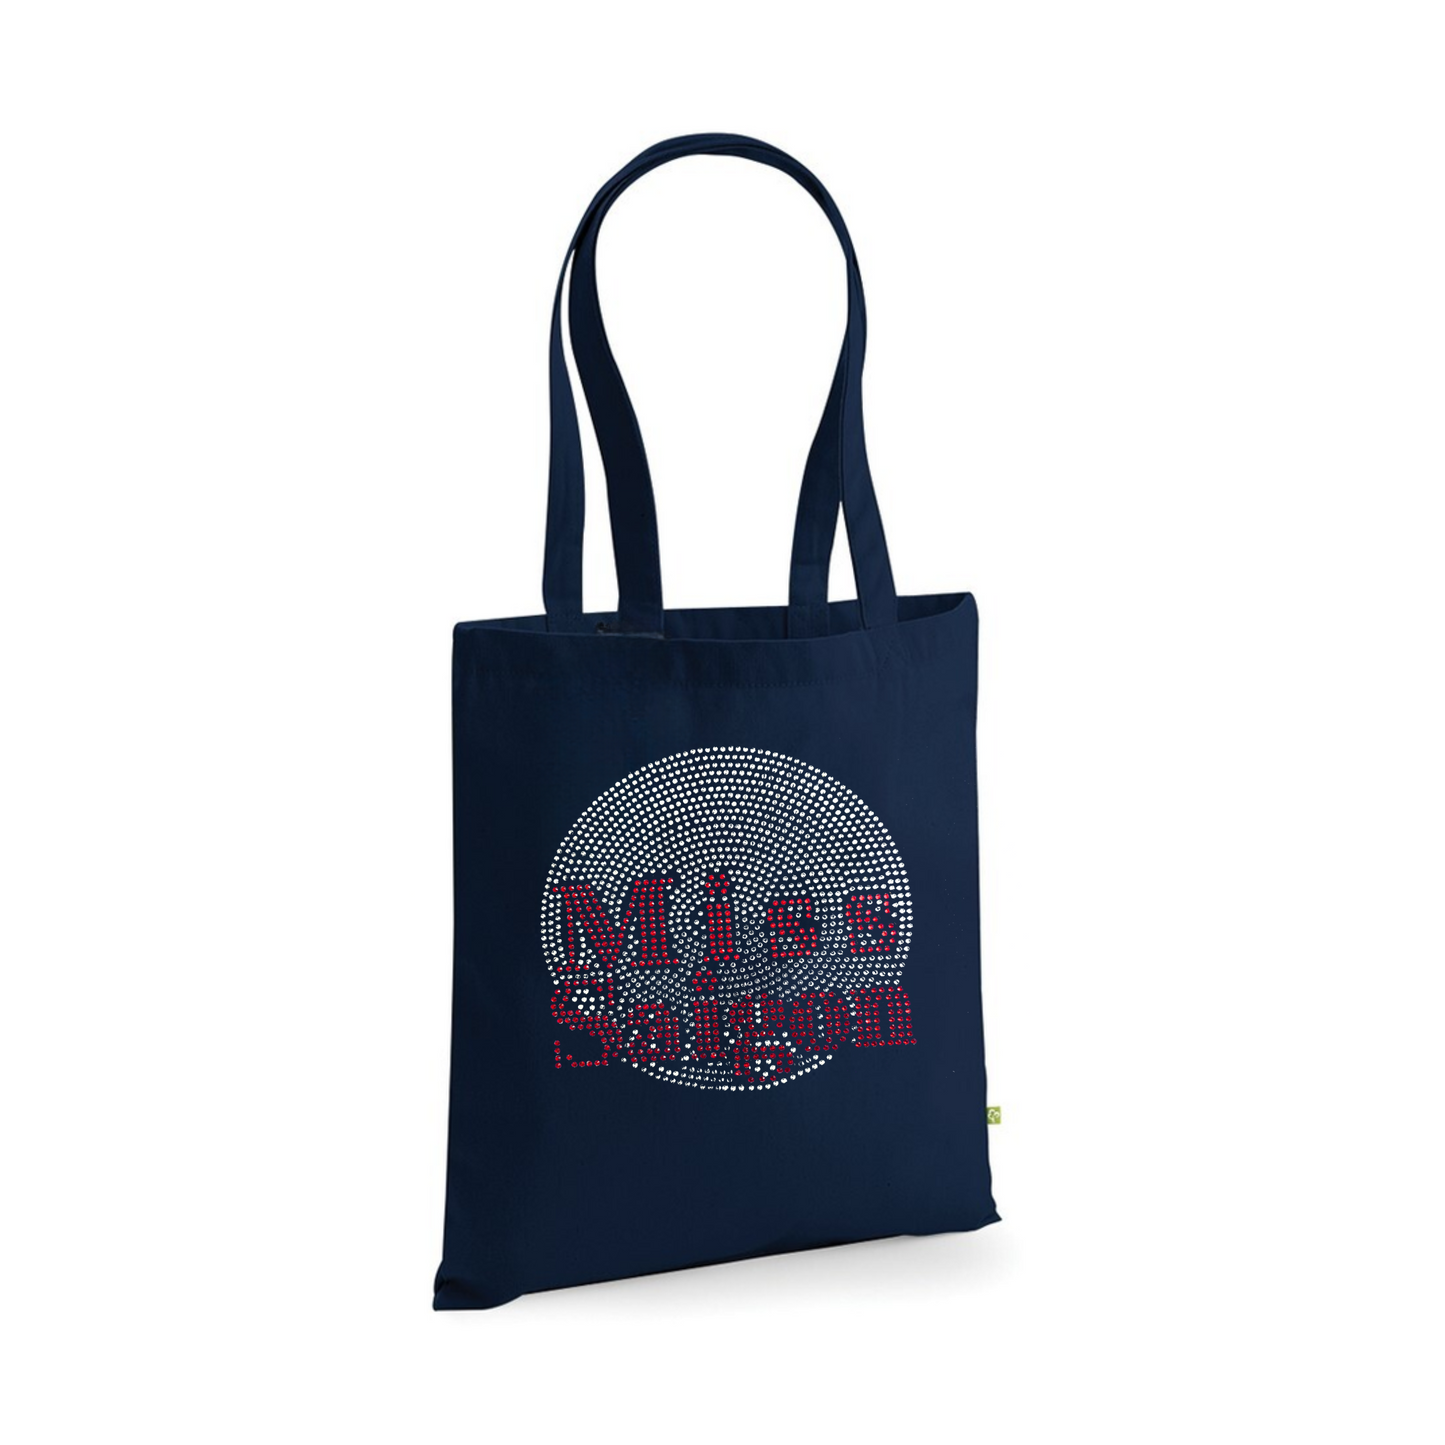 Miss Saigon musical theatre heavy cotton tote bag, sparkly gift idea or theatre keepsake